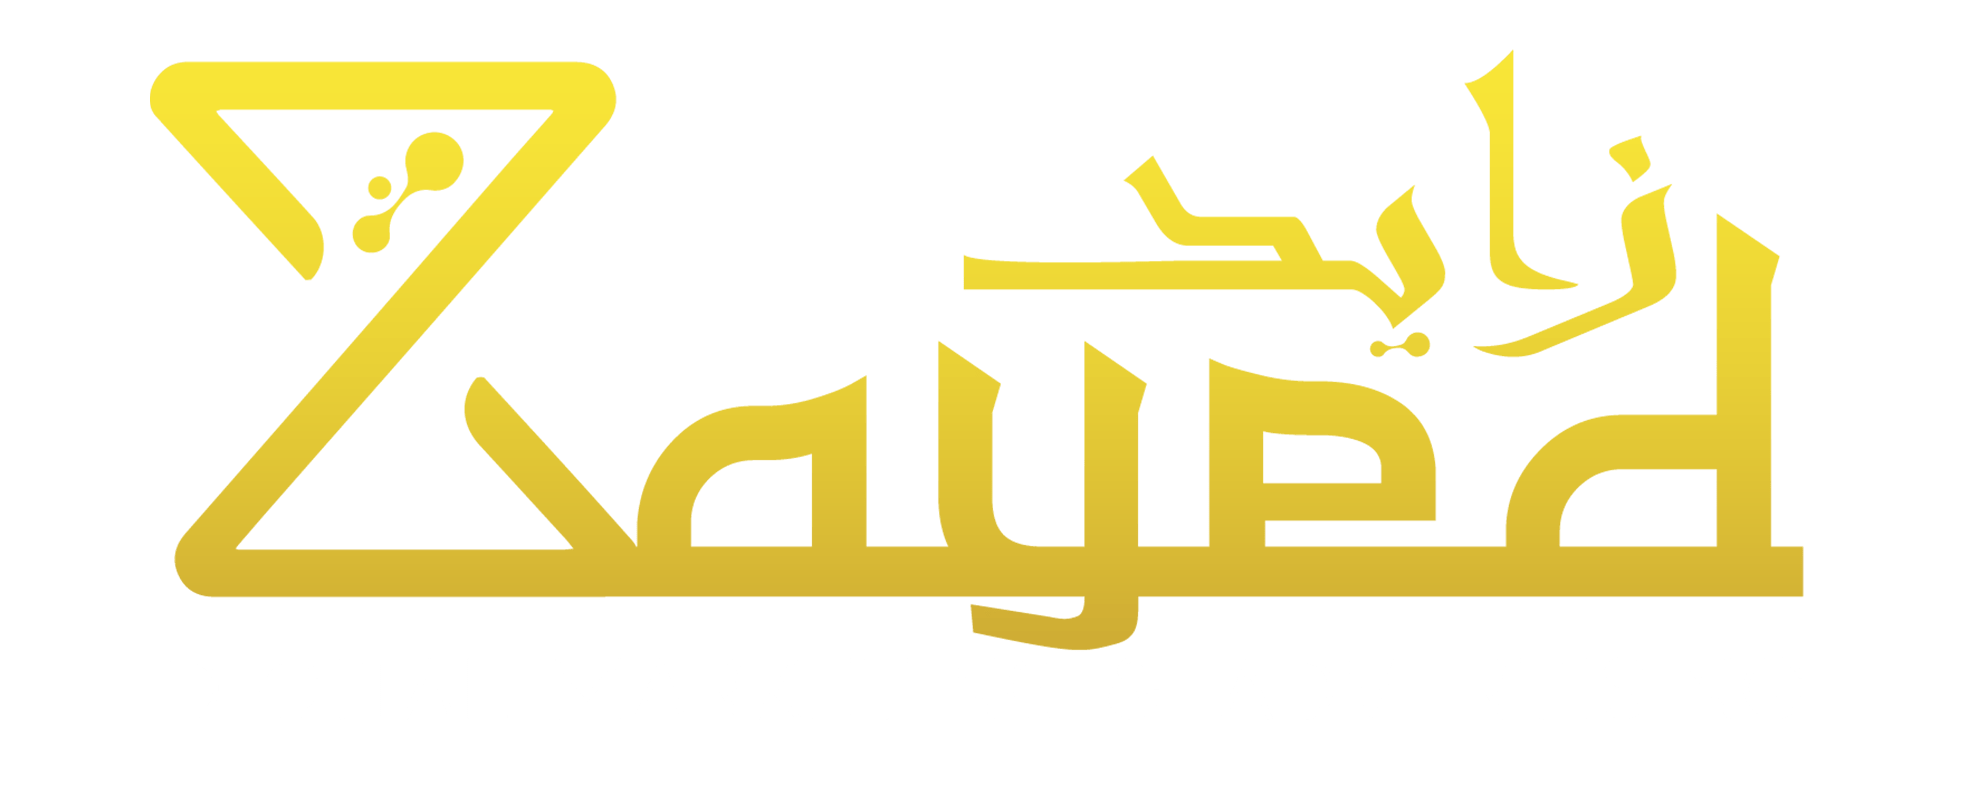 Zayed Digital Marketing and Advertising